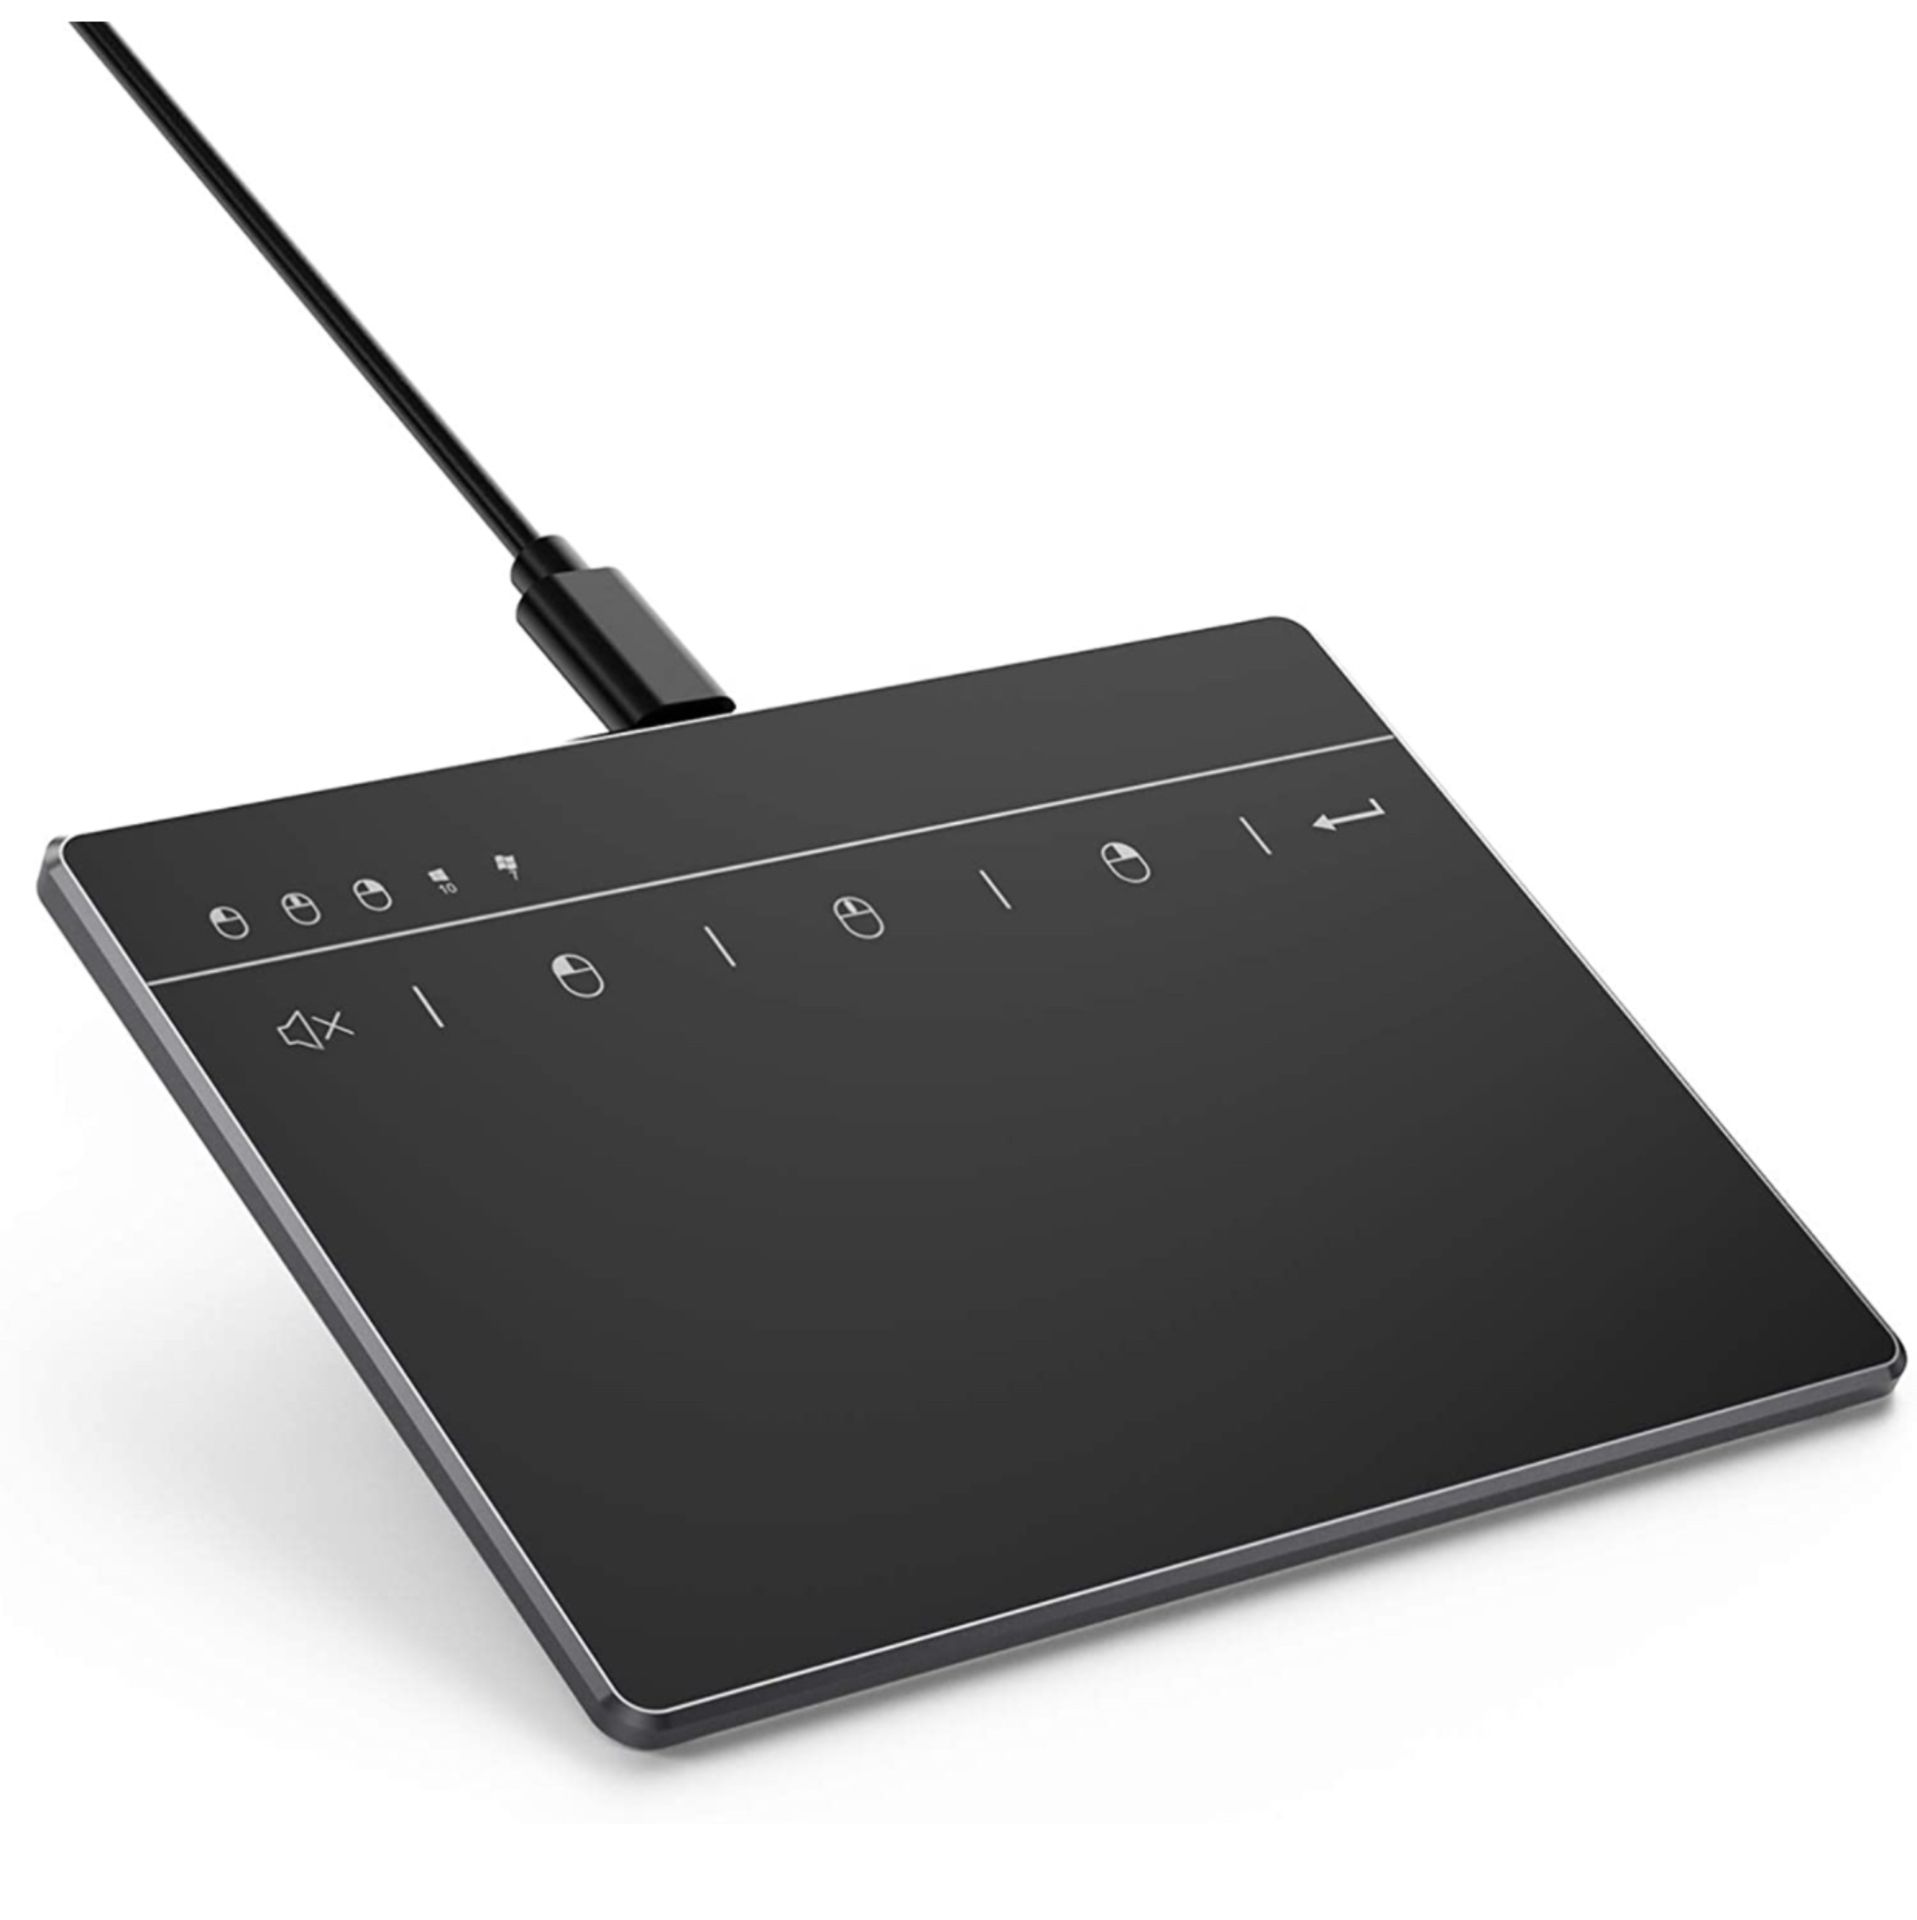 RRP £43.99 Seenda Touchpad Trackpad External USB Precision Trackpad